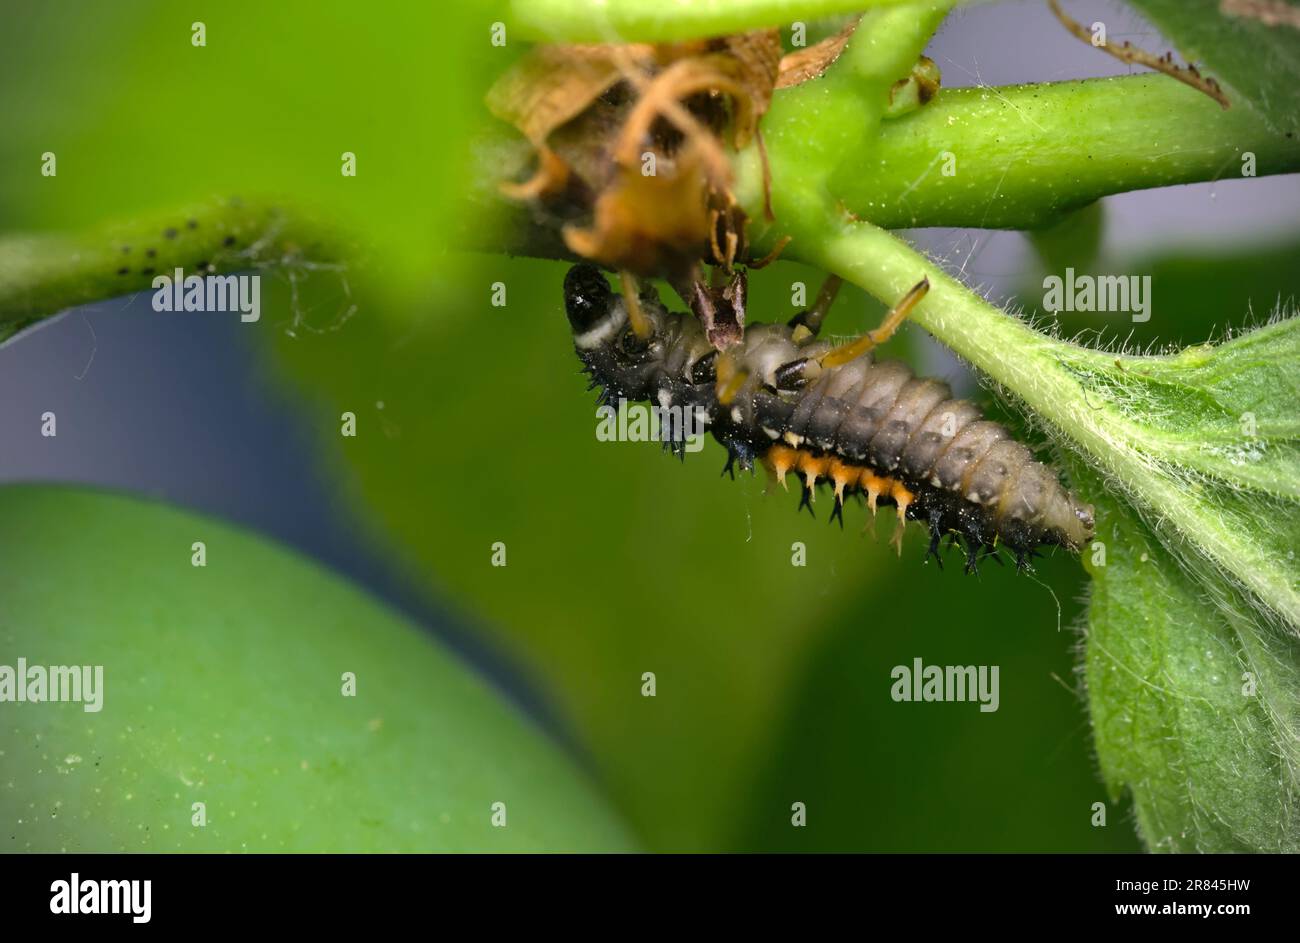 Larva of an Asian lady beetle (Harmonia axyridis) crawling on a plant, macro photography, insects, closeup, nature, biodiversity Stock Photo